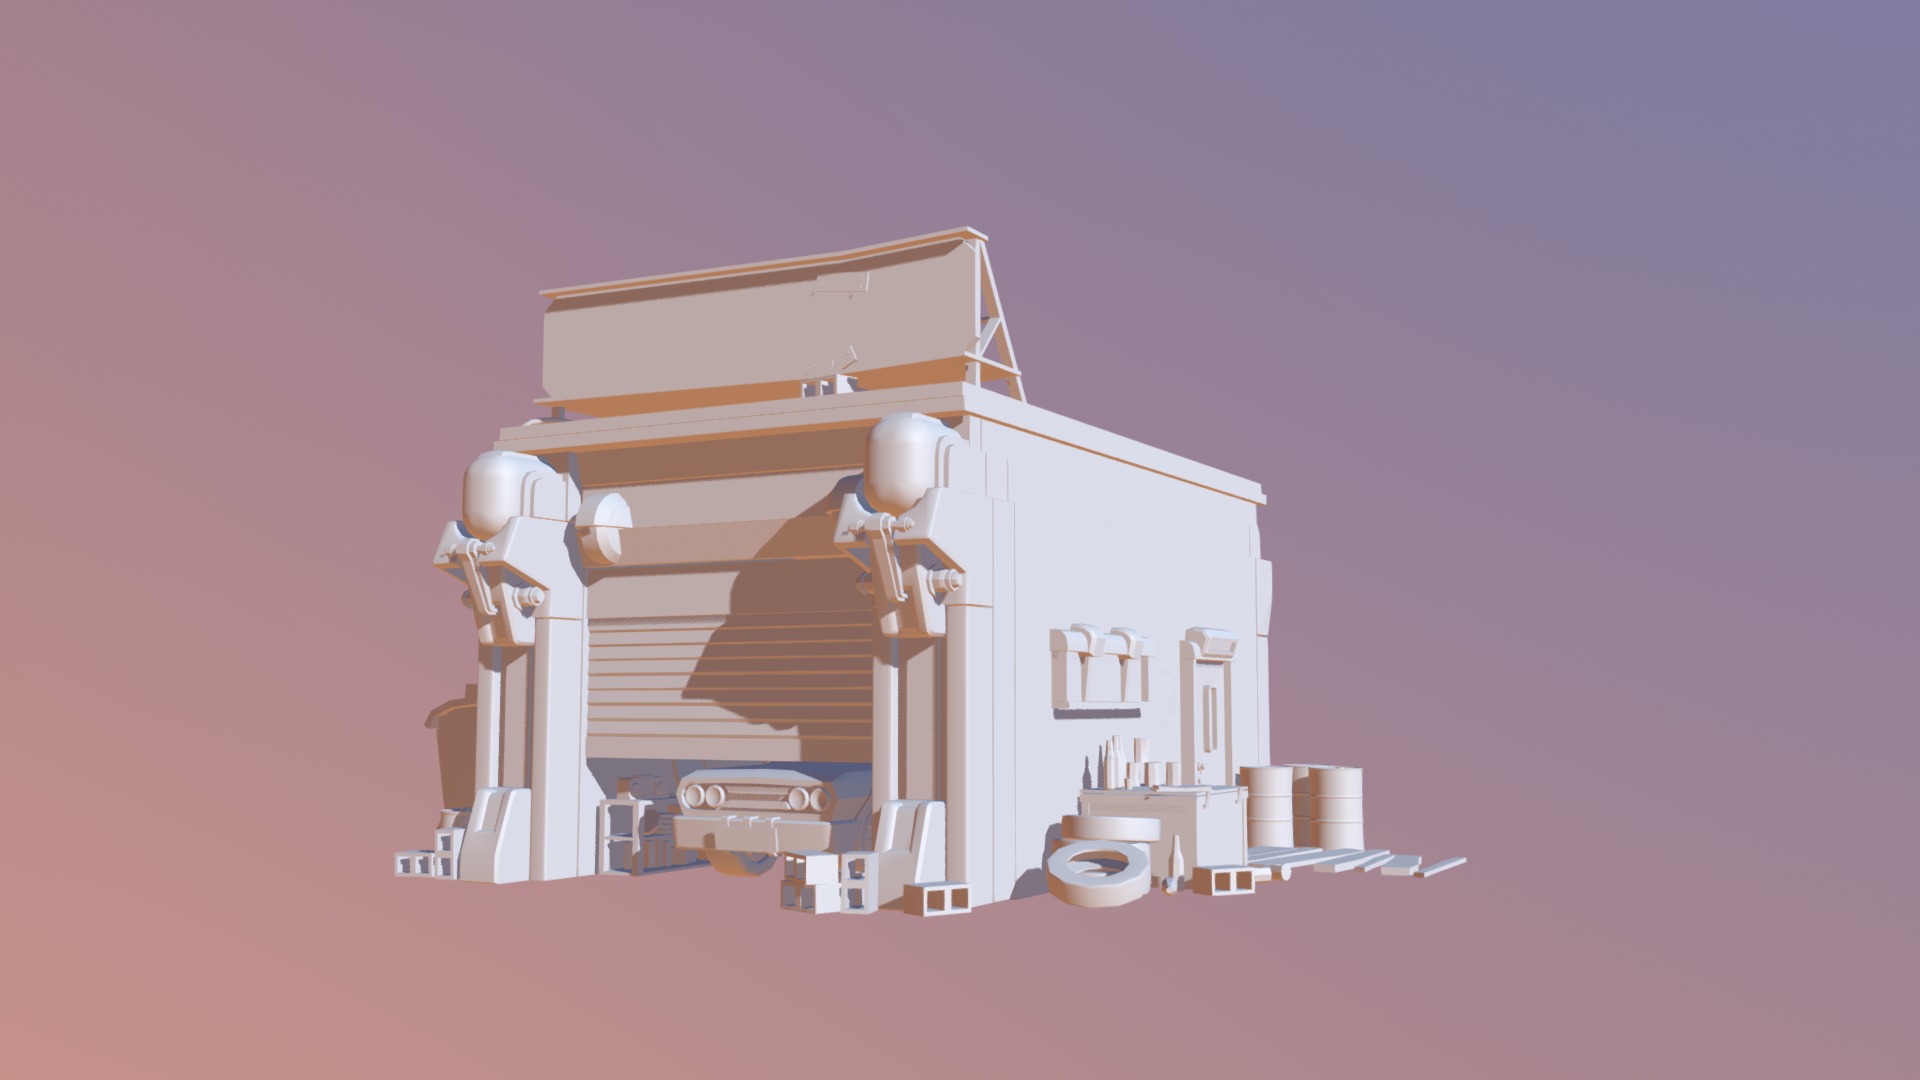 Garage_LP - 3D model by OlegatoRUS 3d model